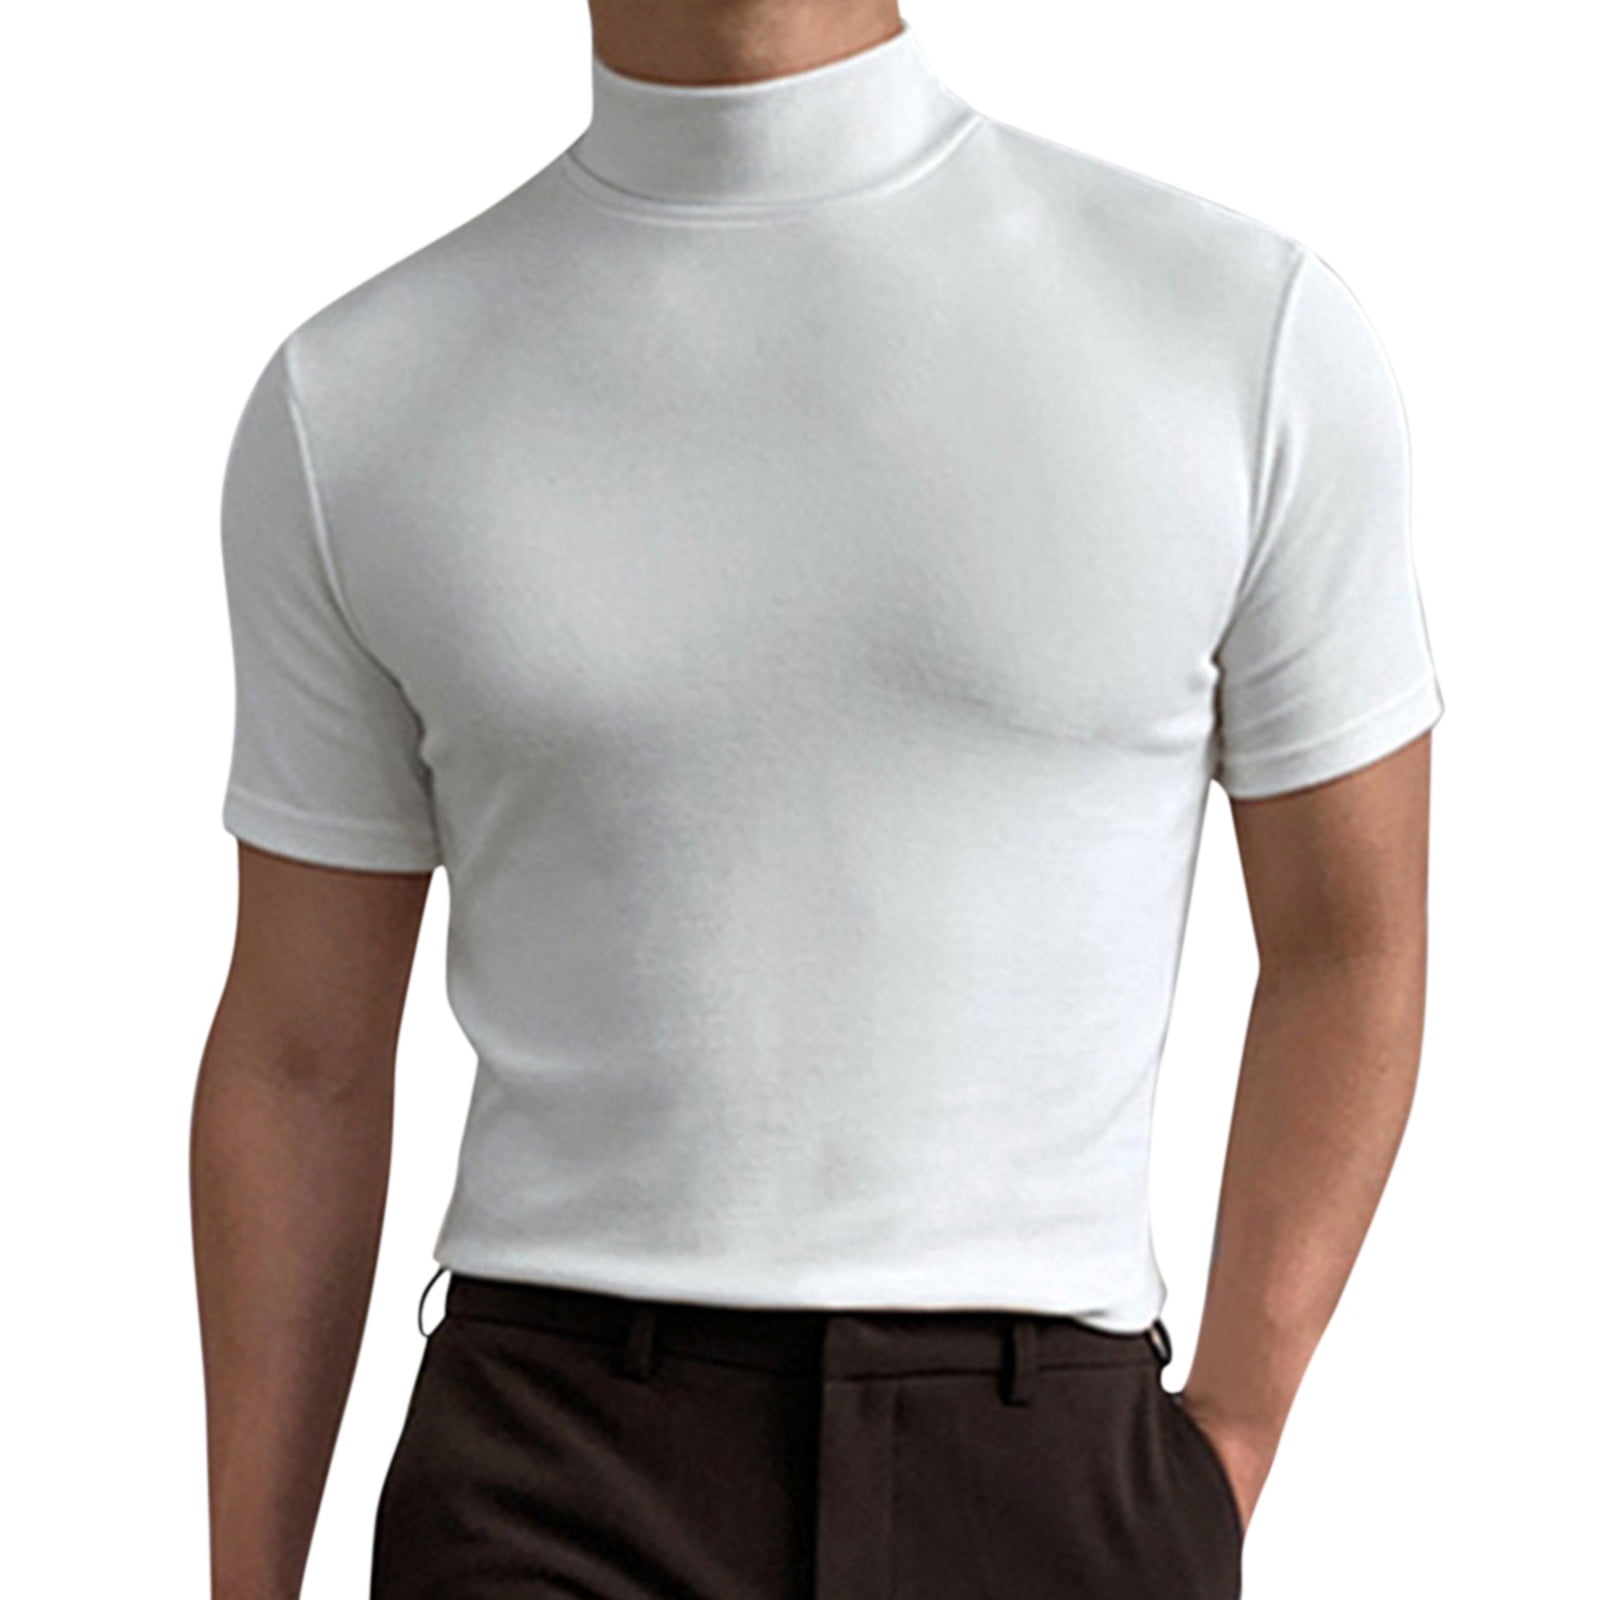 sleeveless compression shirt turtleneck